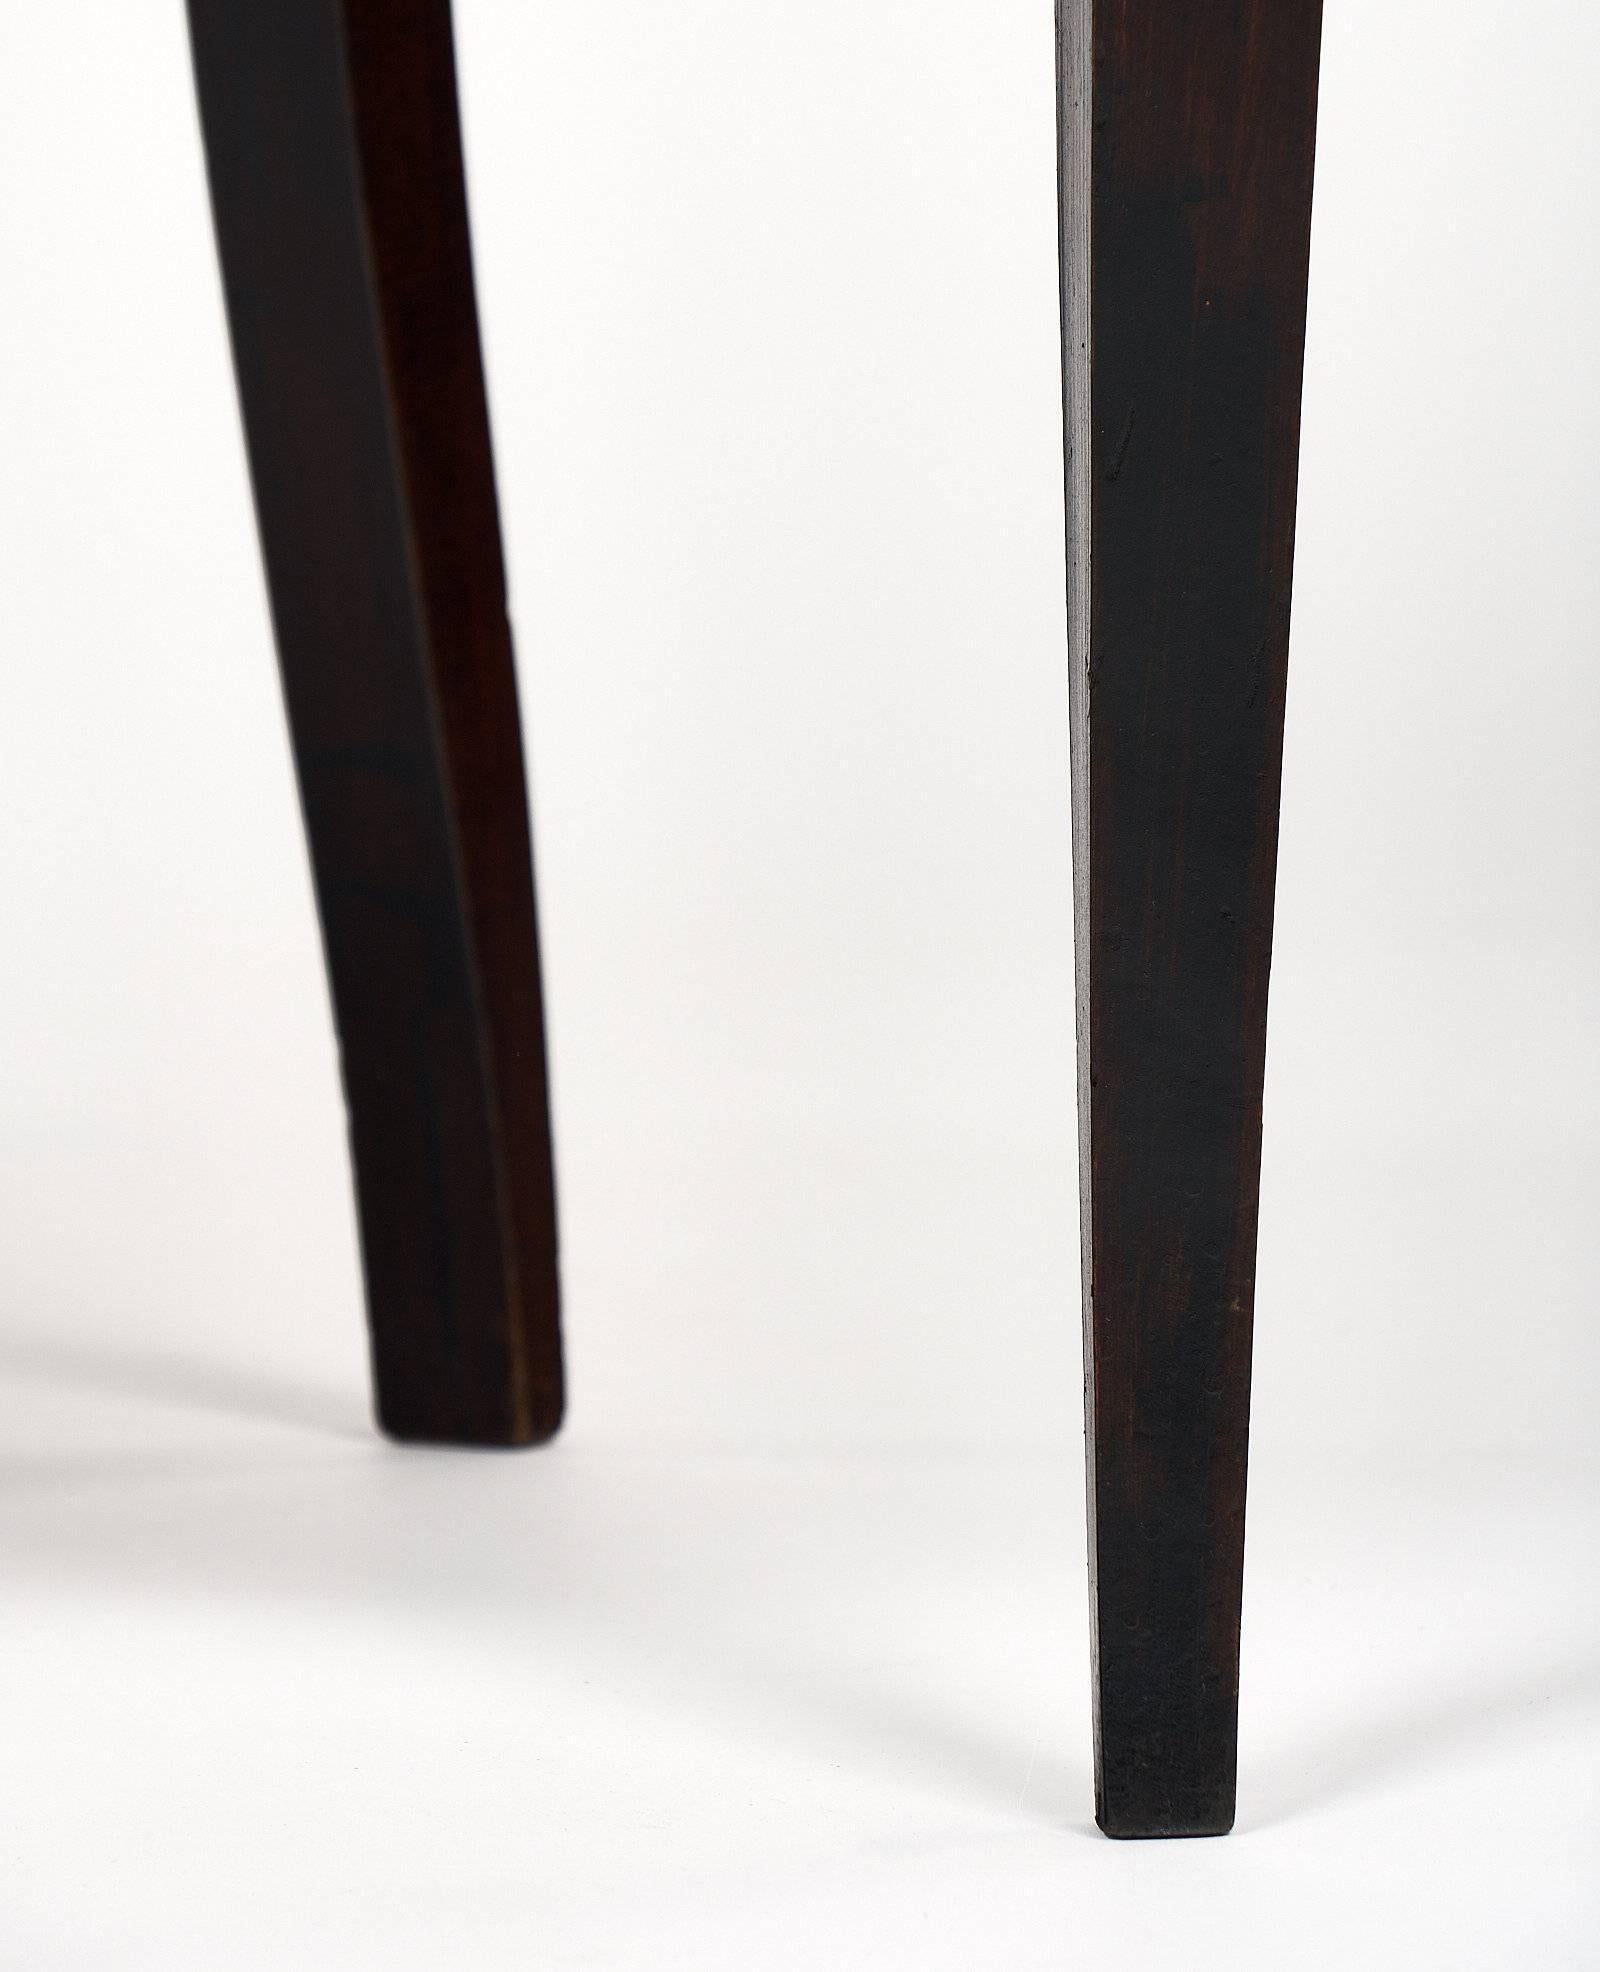 Scallop-Back Leather Art Deco Bridge Chair 2